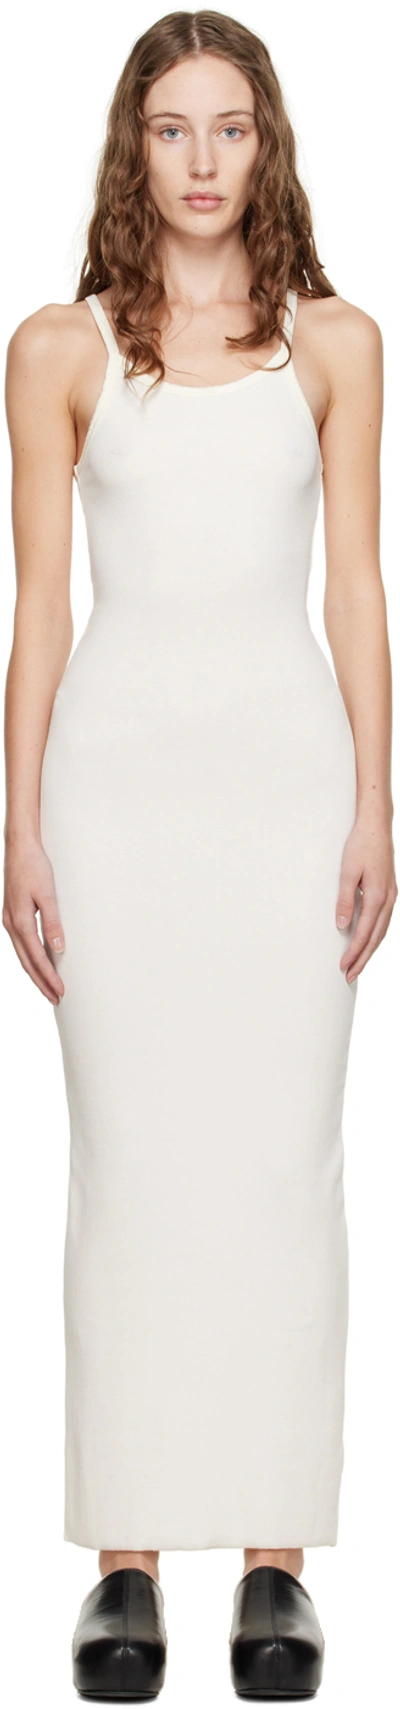 Éterne Off-white Tank Maxi Dress In Cream